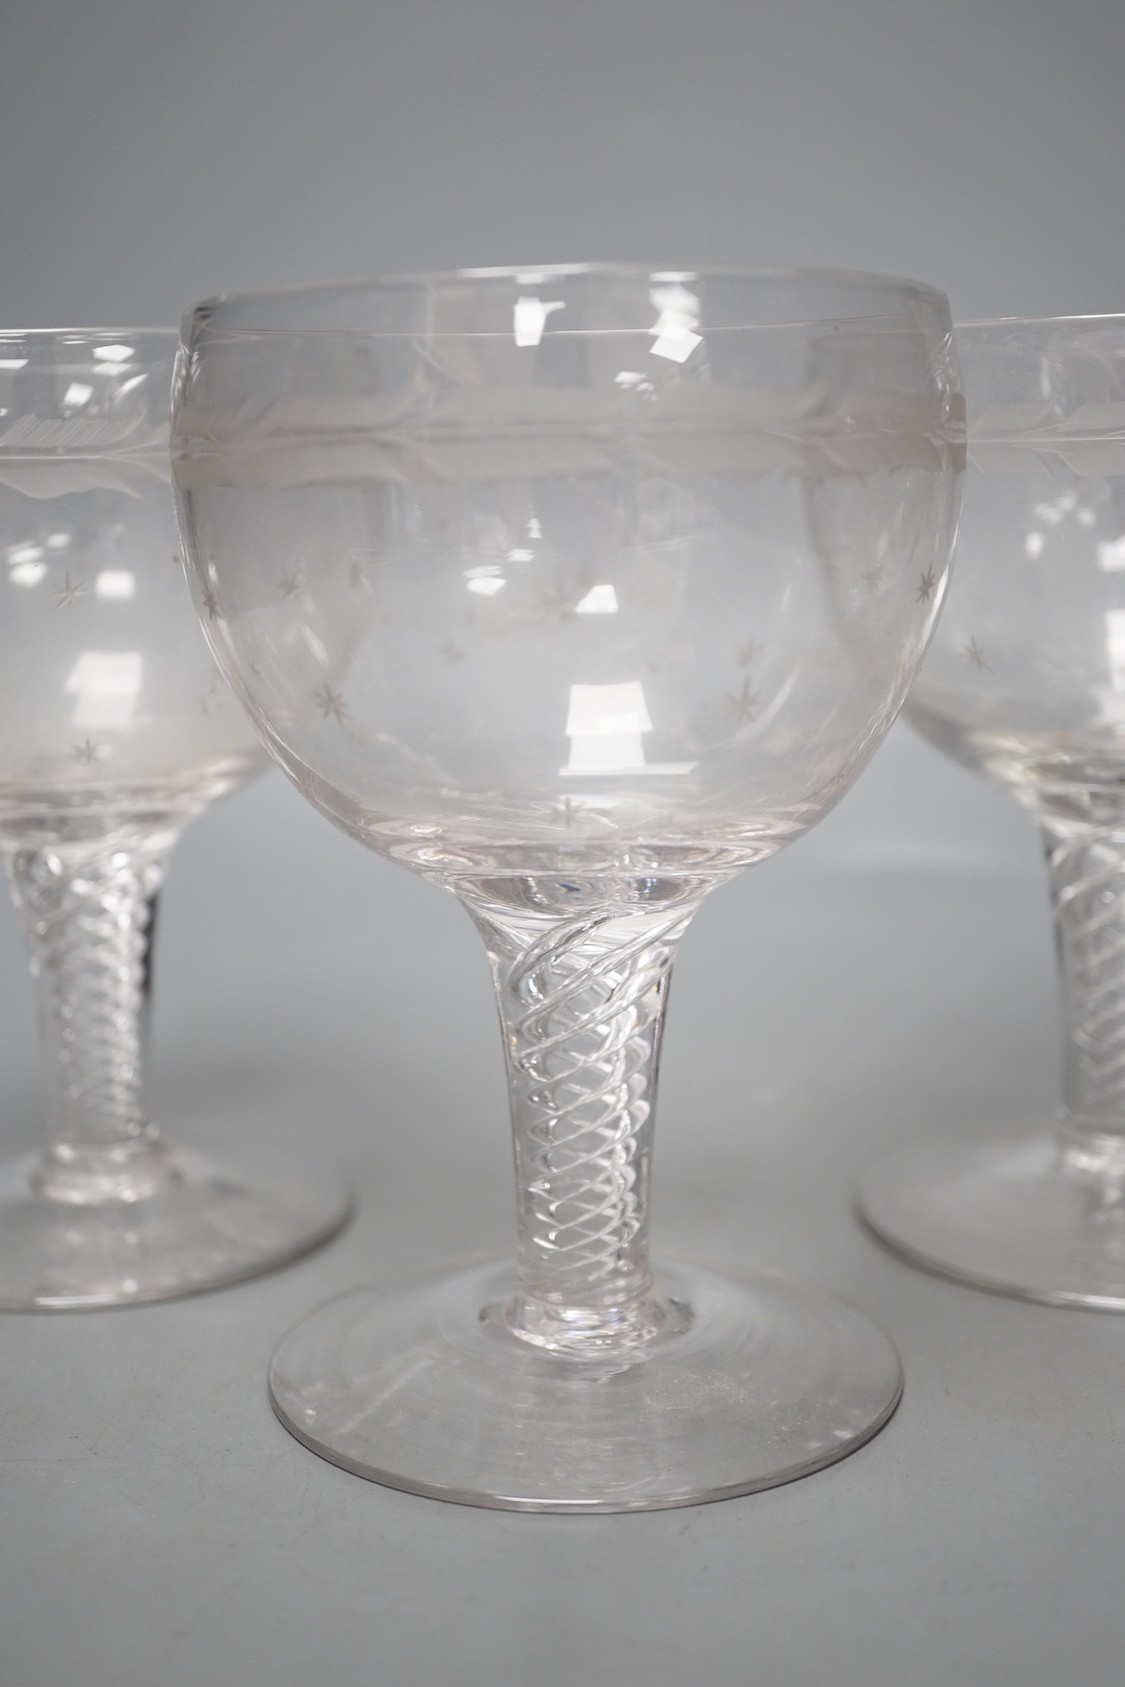 Four Edwardian air twist wine goblets - 14cm tall